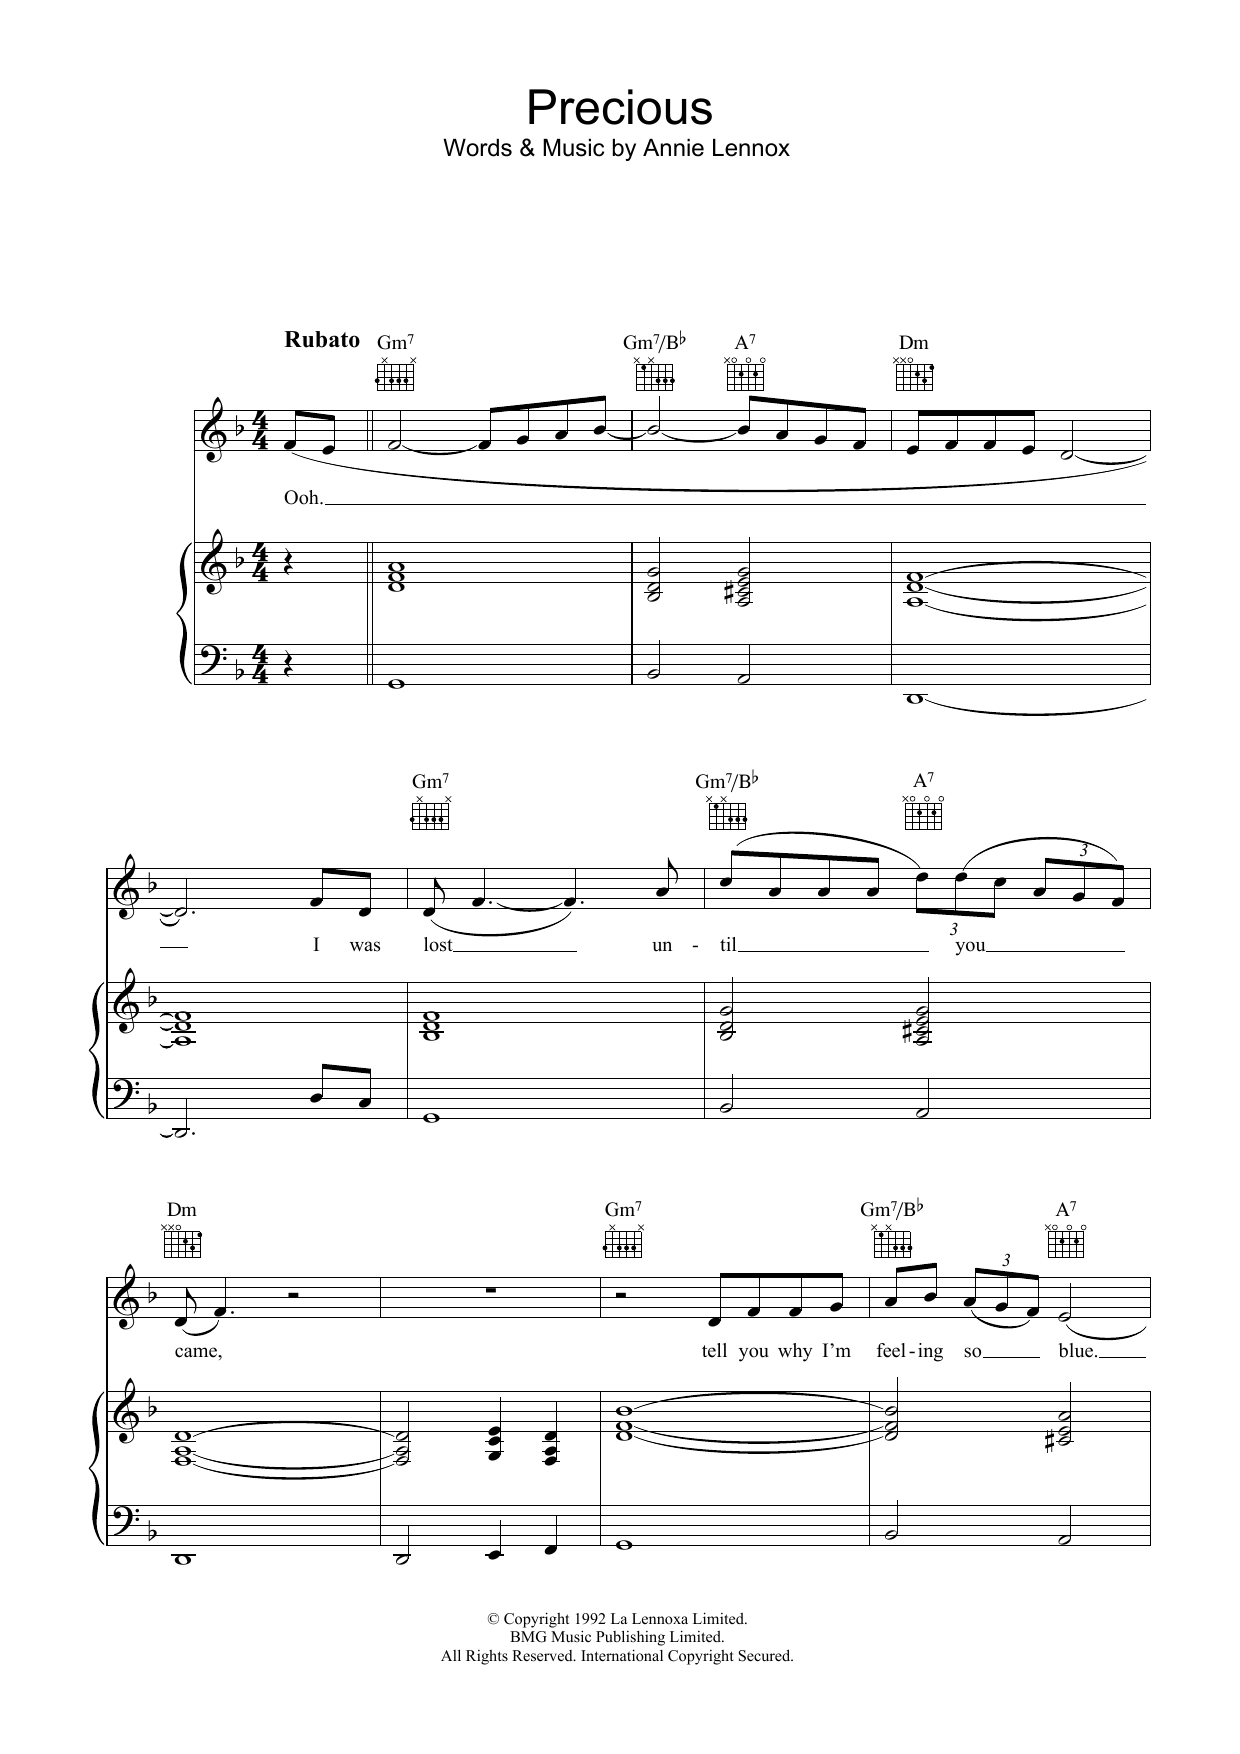 Annie Lennox Precious sheet music notes and chords arranged for Piano, Vocal & Guitar Chords